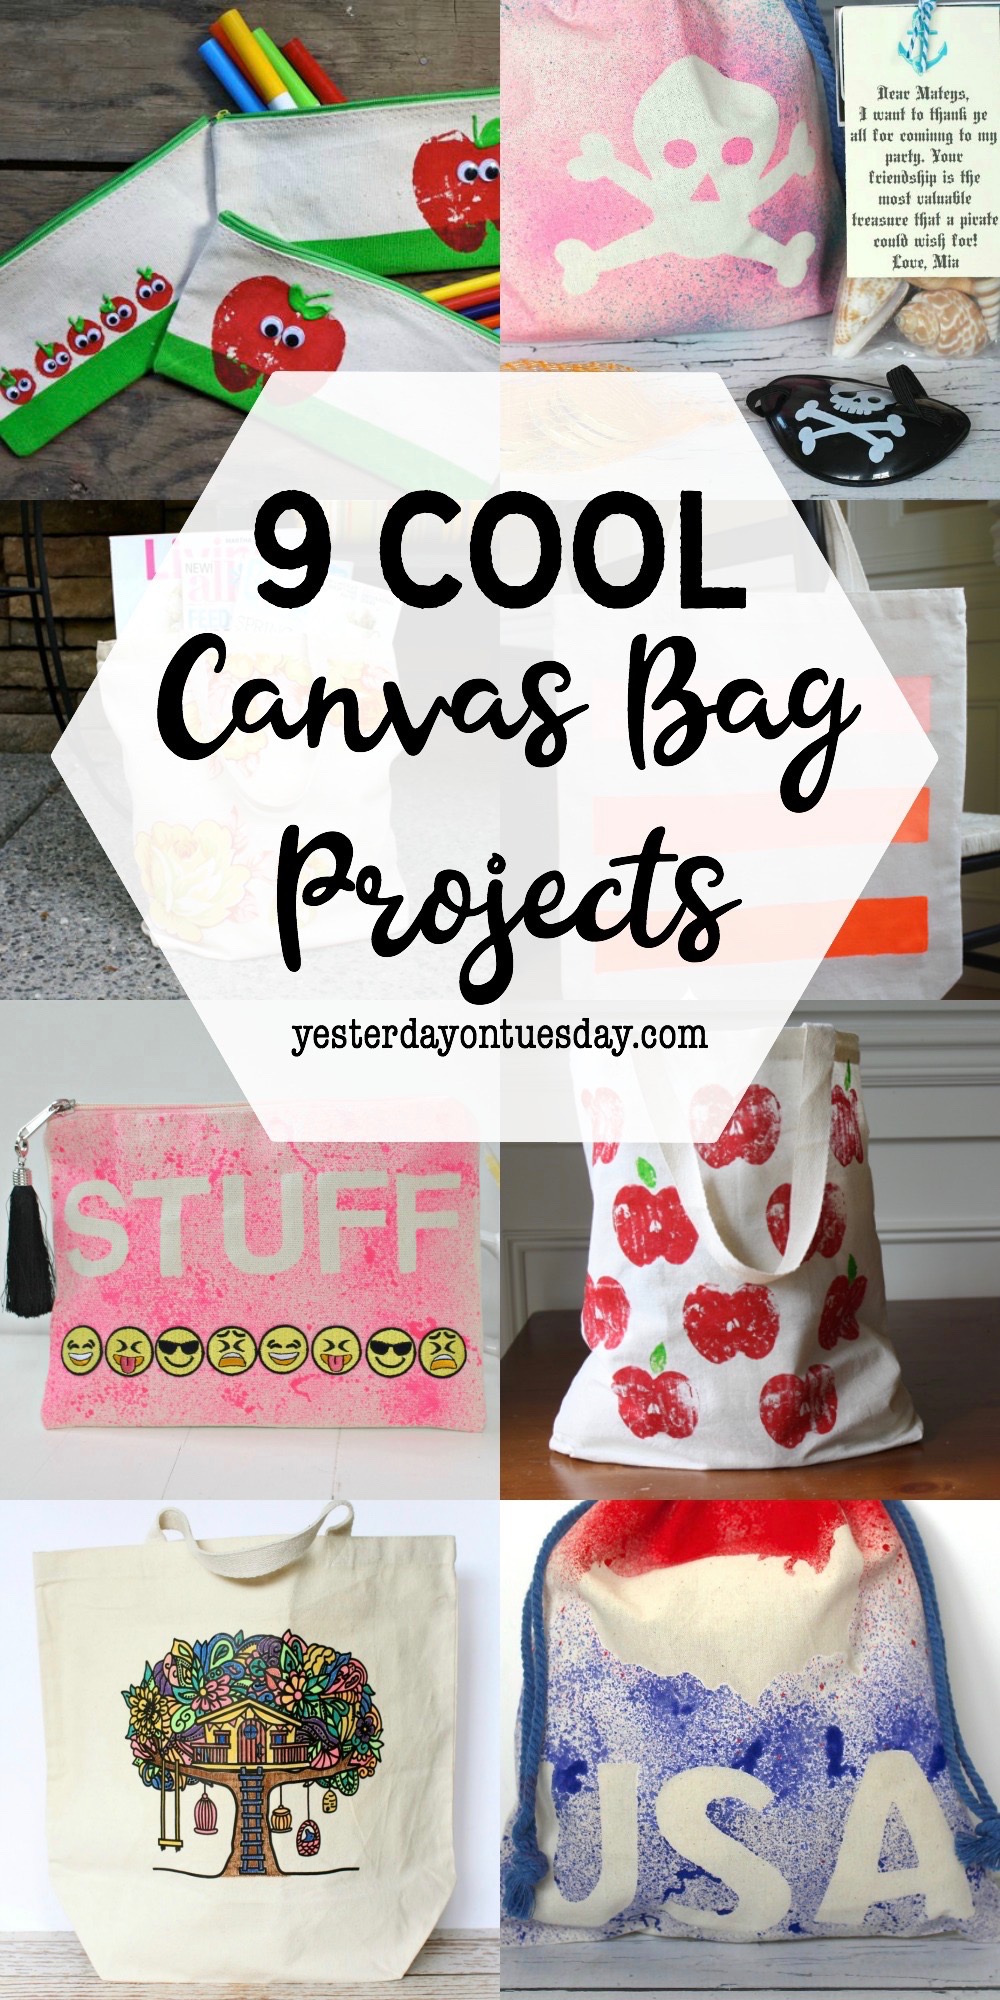 DIY Canvas Bag Projects